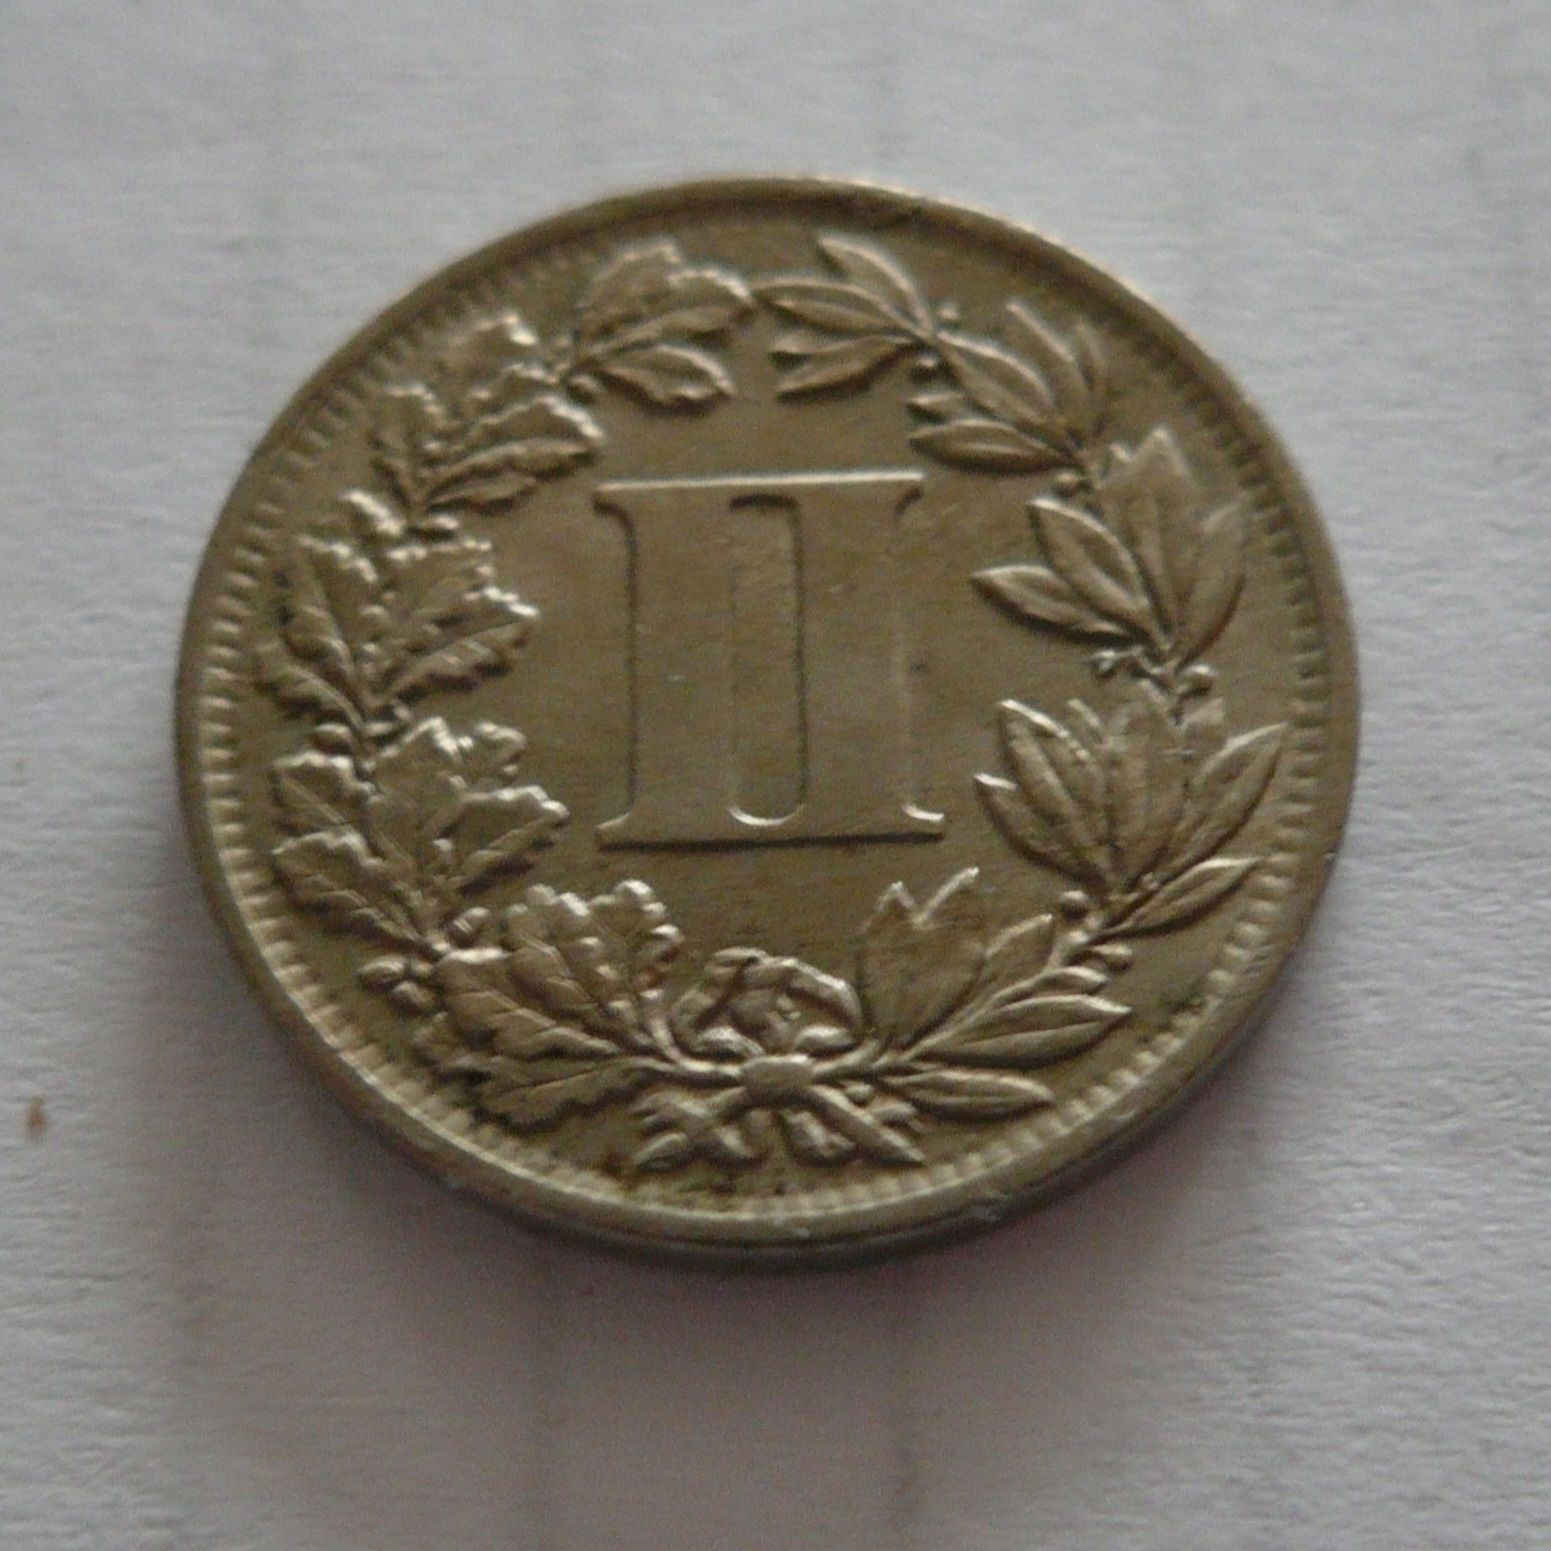 2 Cent, 1883, Mexiko